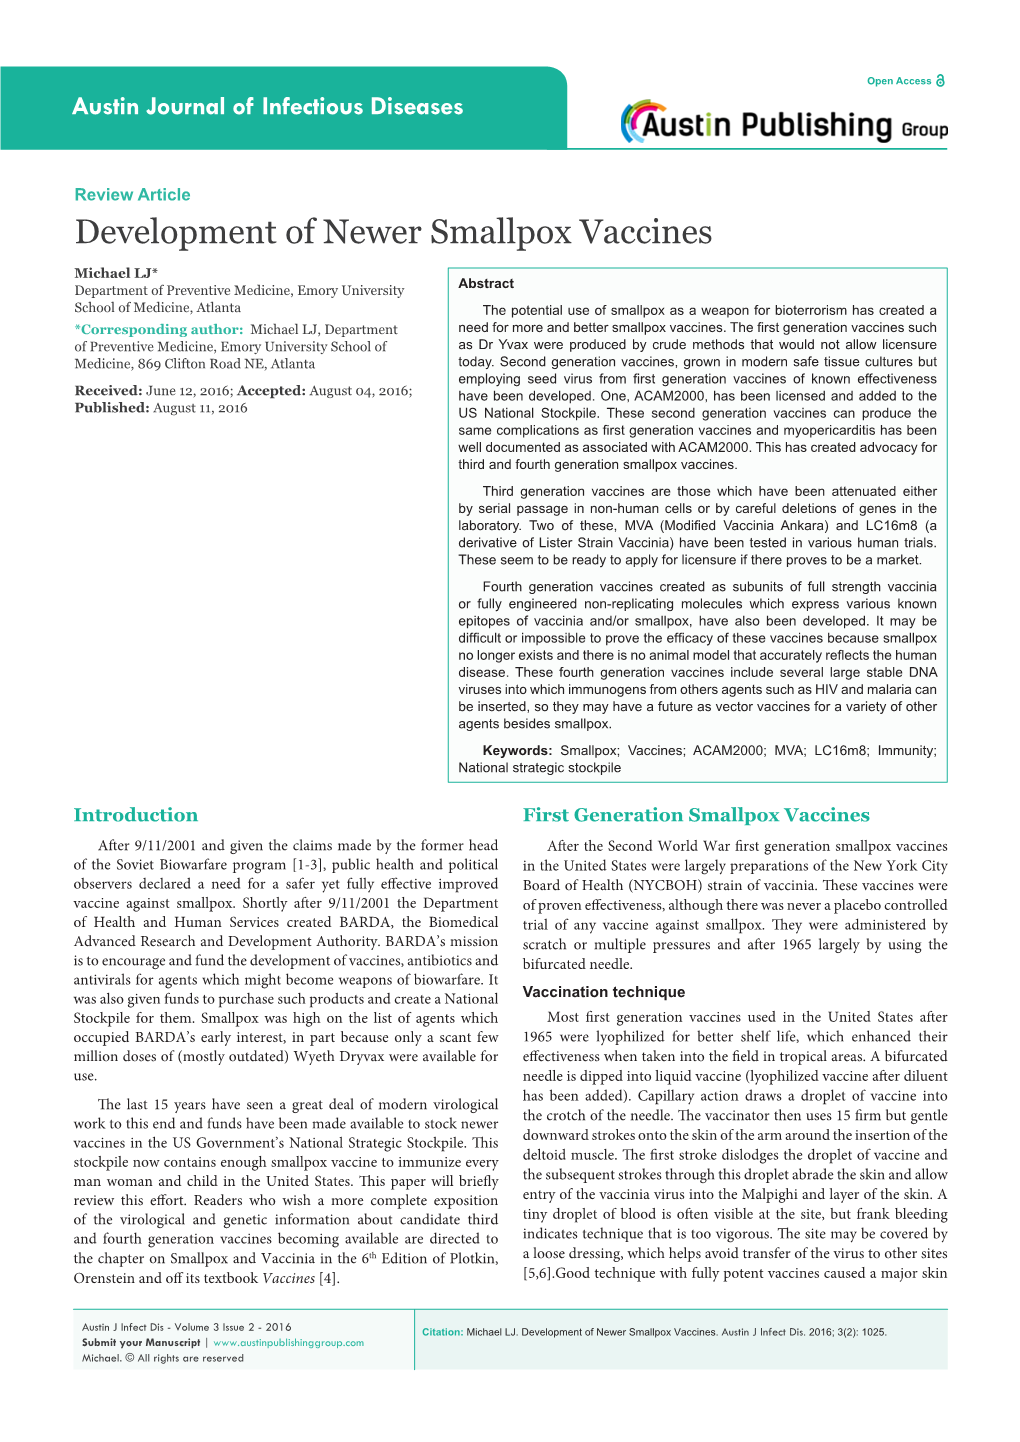 Development of Newer Smallpox Vaccines